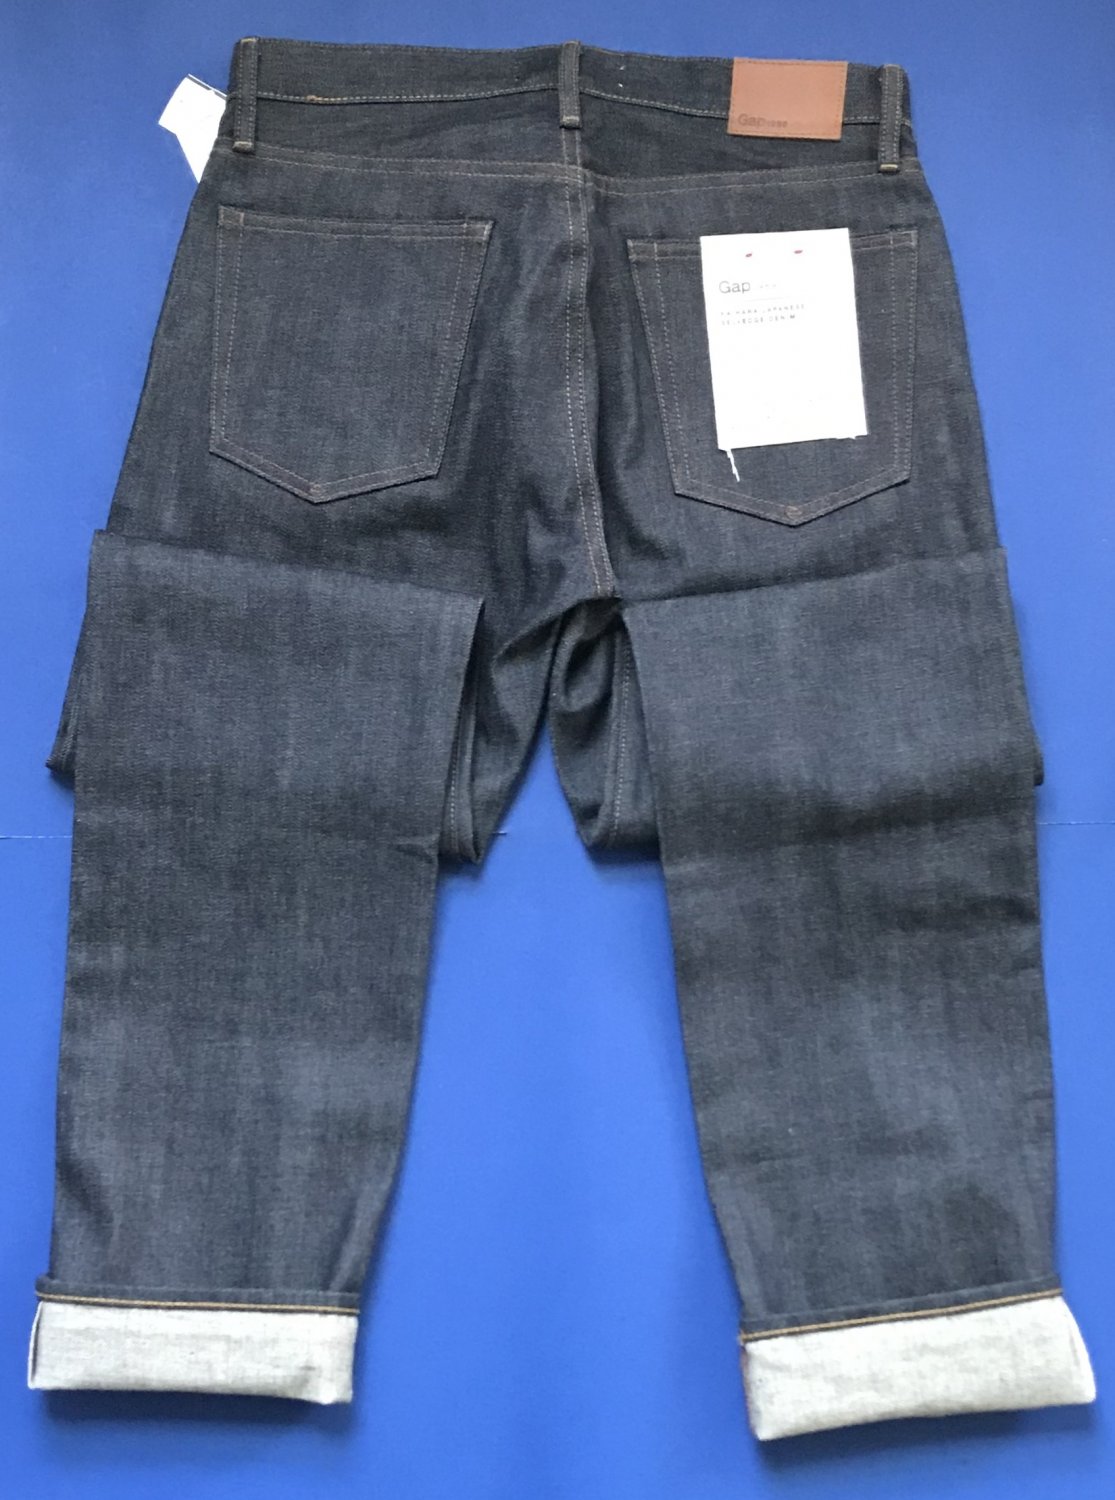 NWT Gap Kaihara Japanese Selvedge Rigid Dark Unwashed Blue Jeans - 30x34